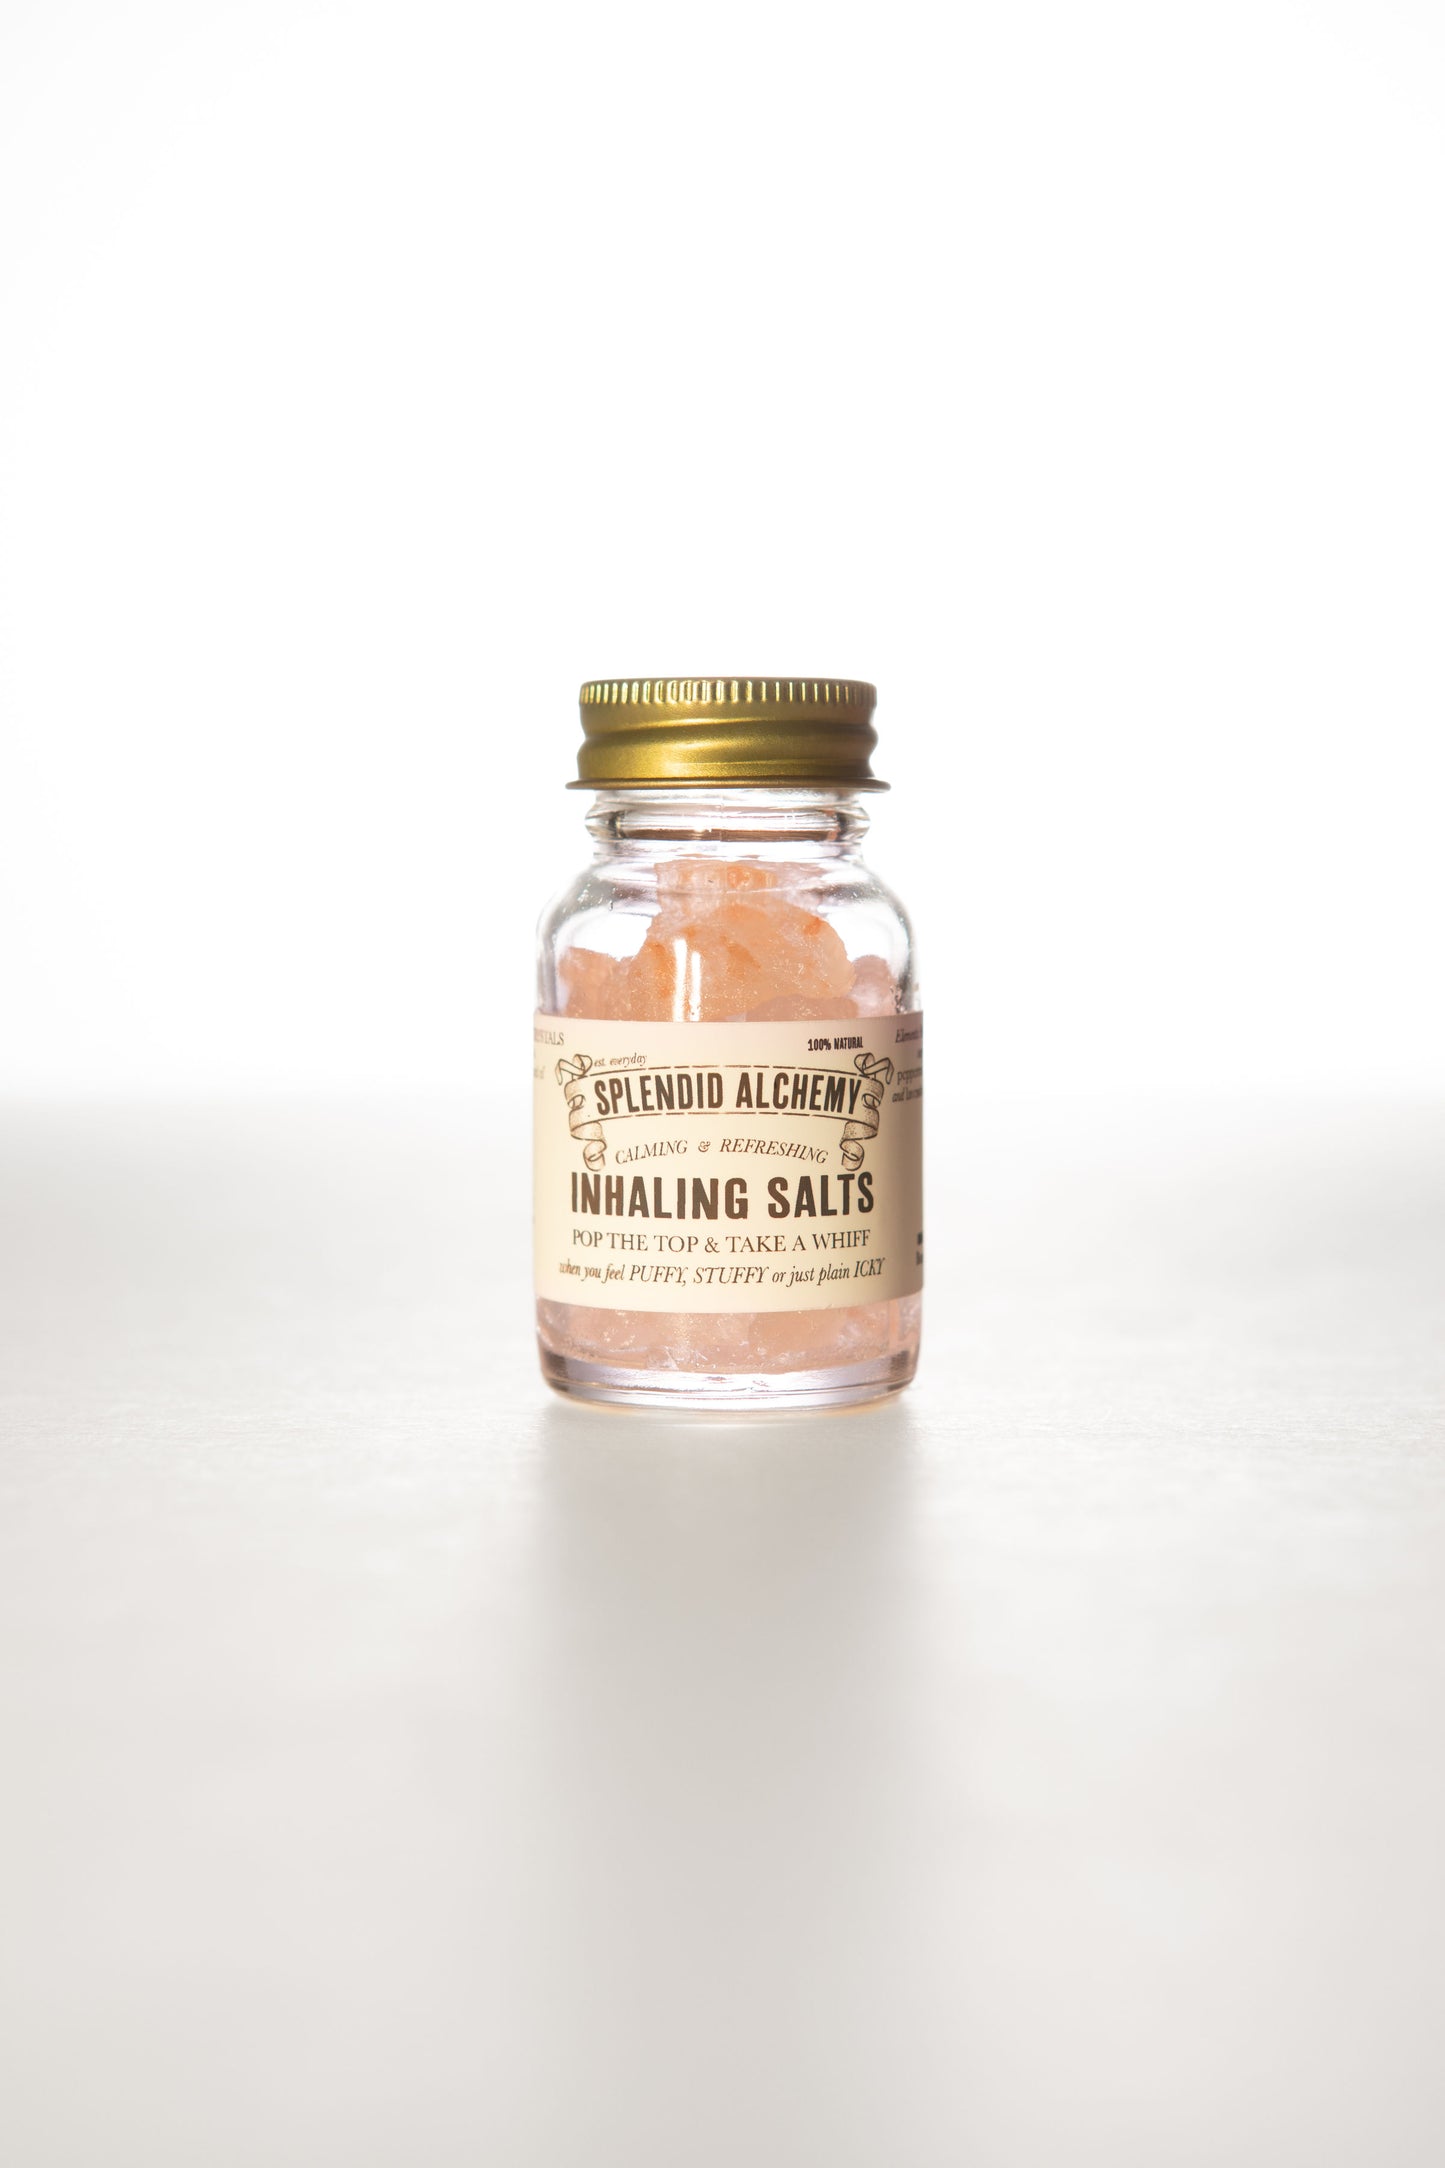 Mini Inhaling Salts by Splendid Alchemy